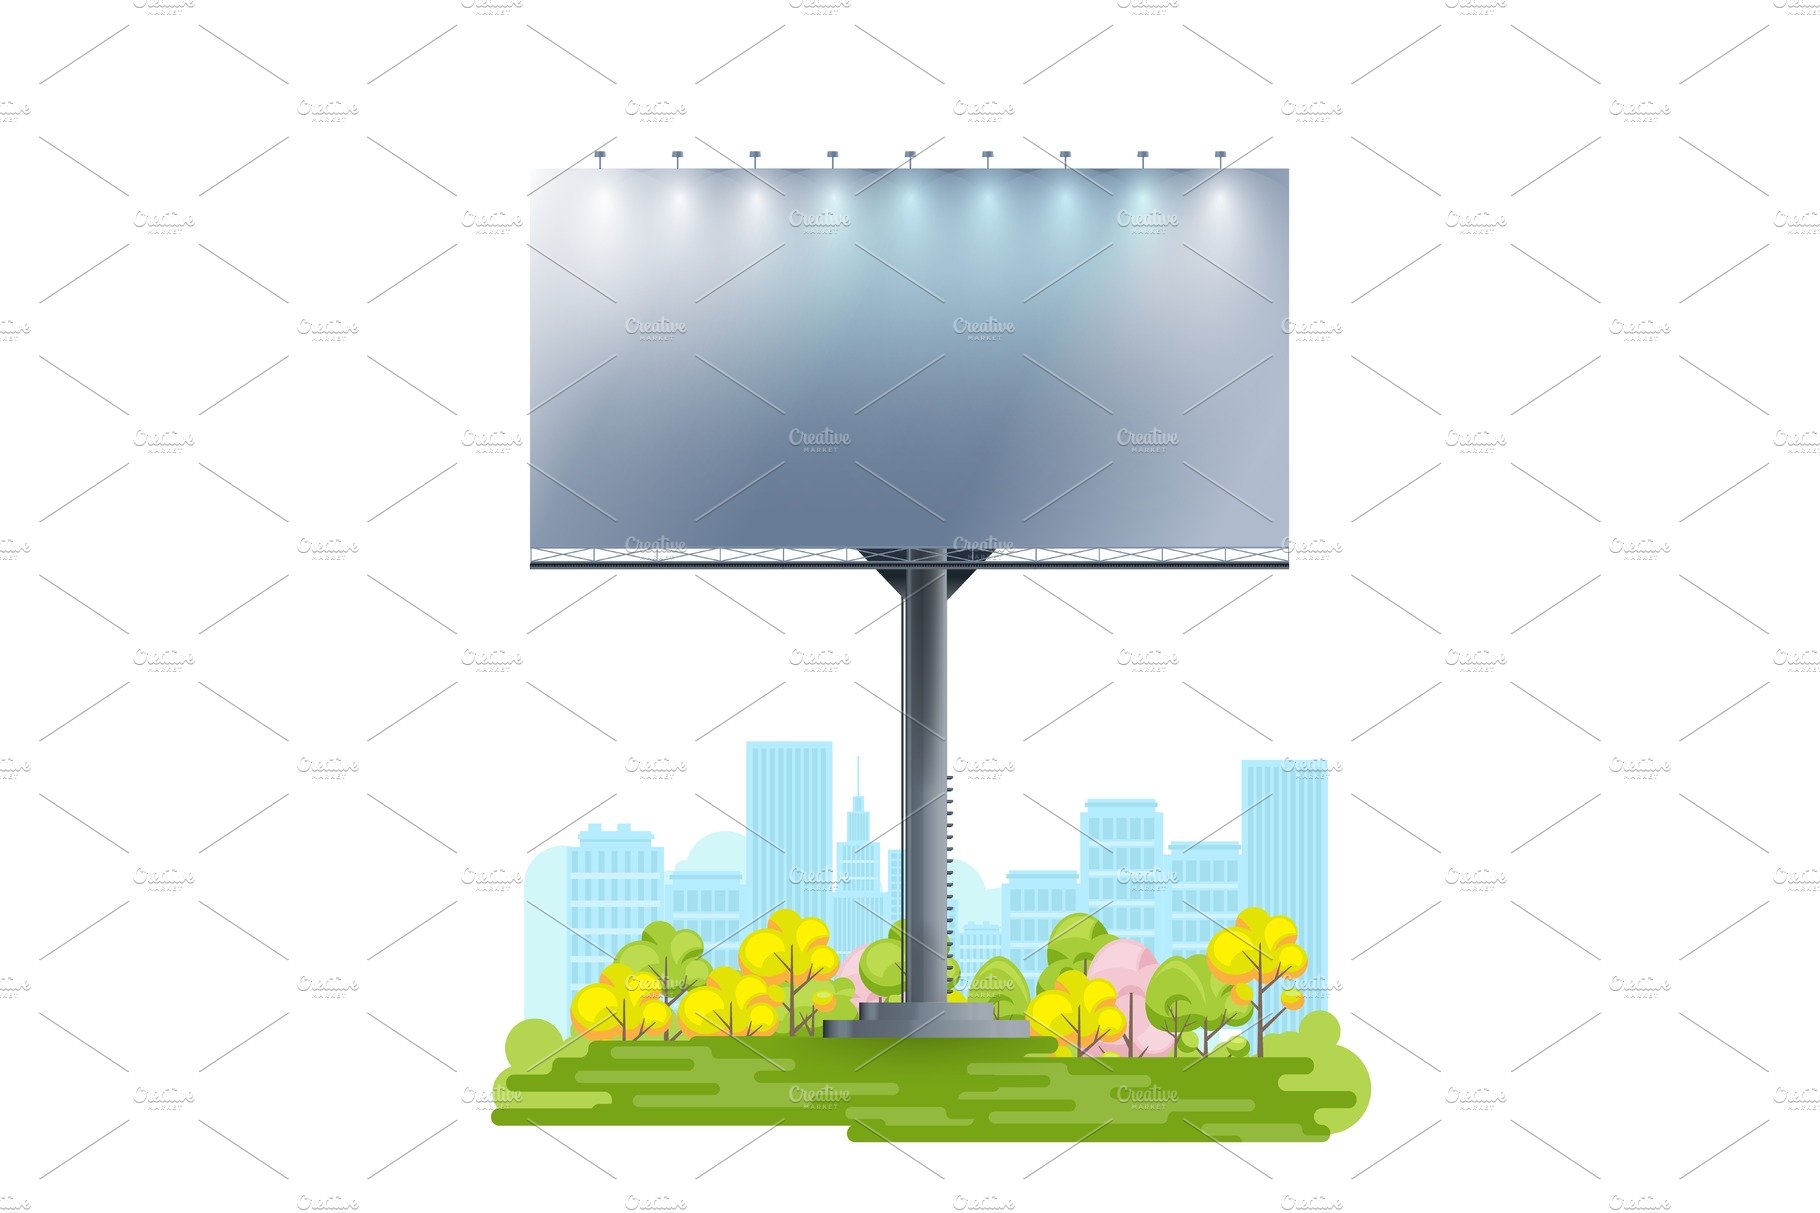 Blank billboard template on cartoon cover image.